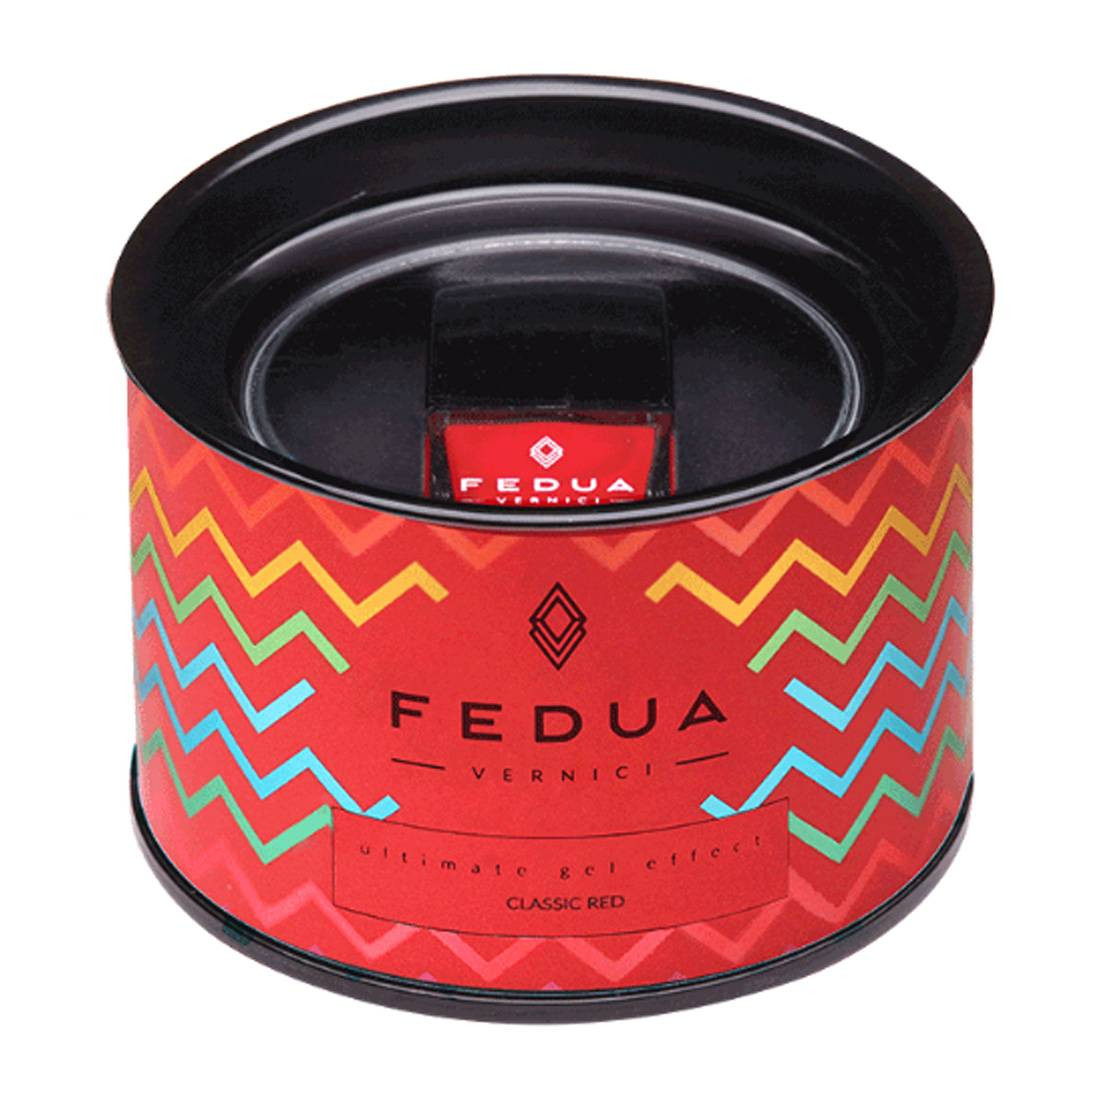 Fedua Vernici Ultimate Collection Classic Red - Лак для нігтів Класичний червоний